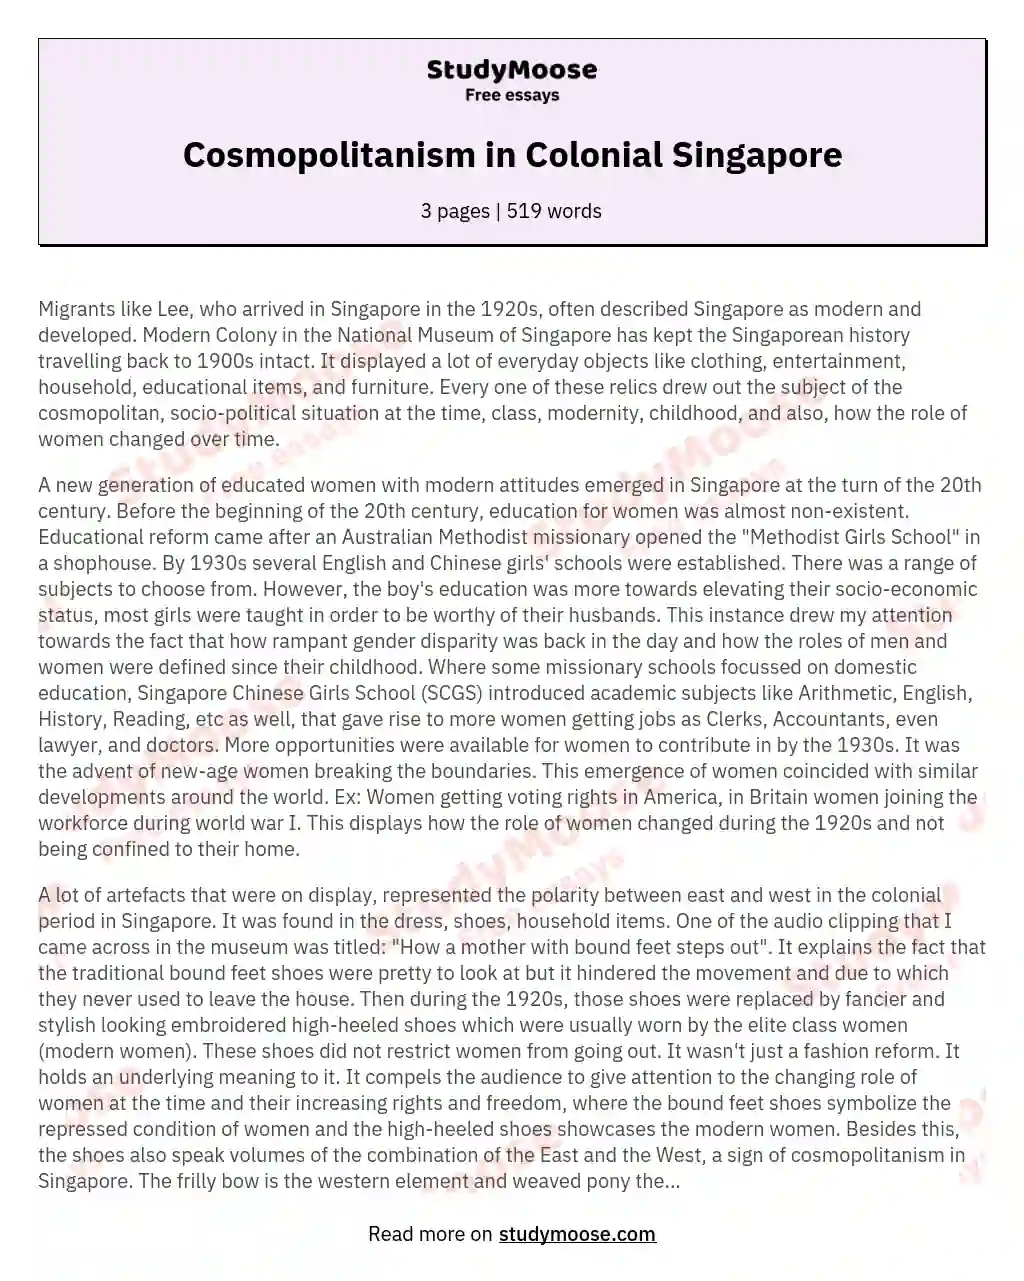 Cosmopolitanism in Colonial Singapore essay